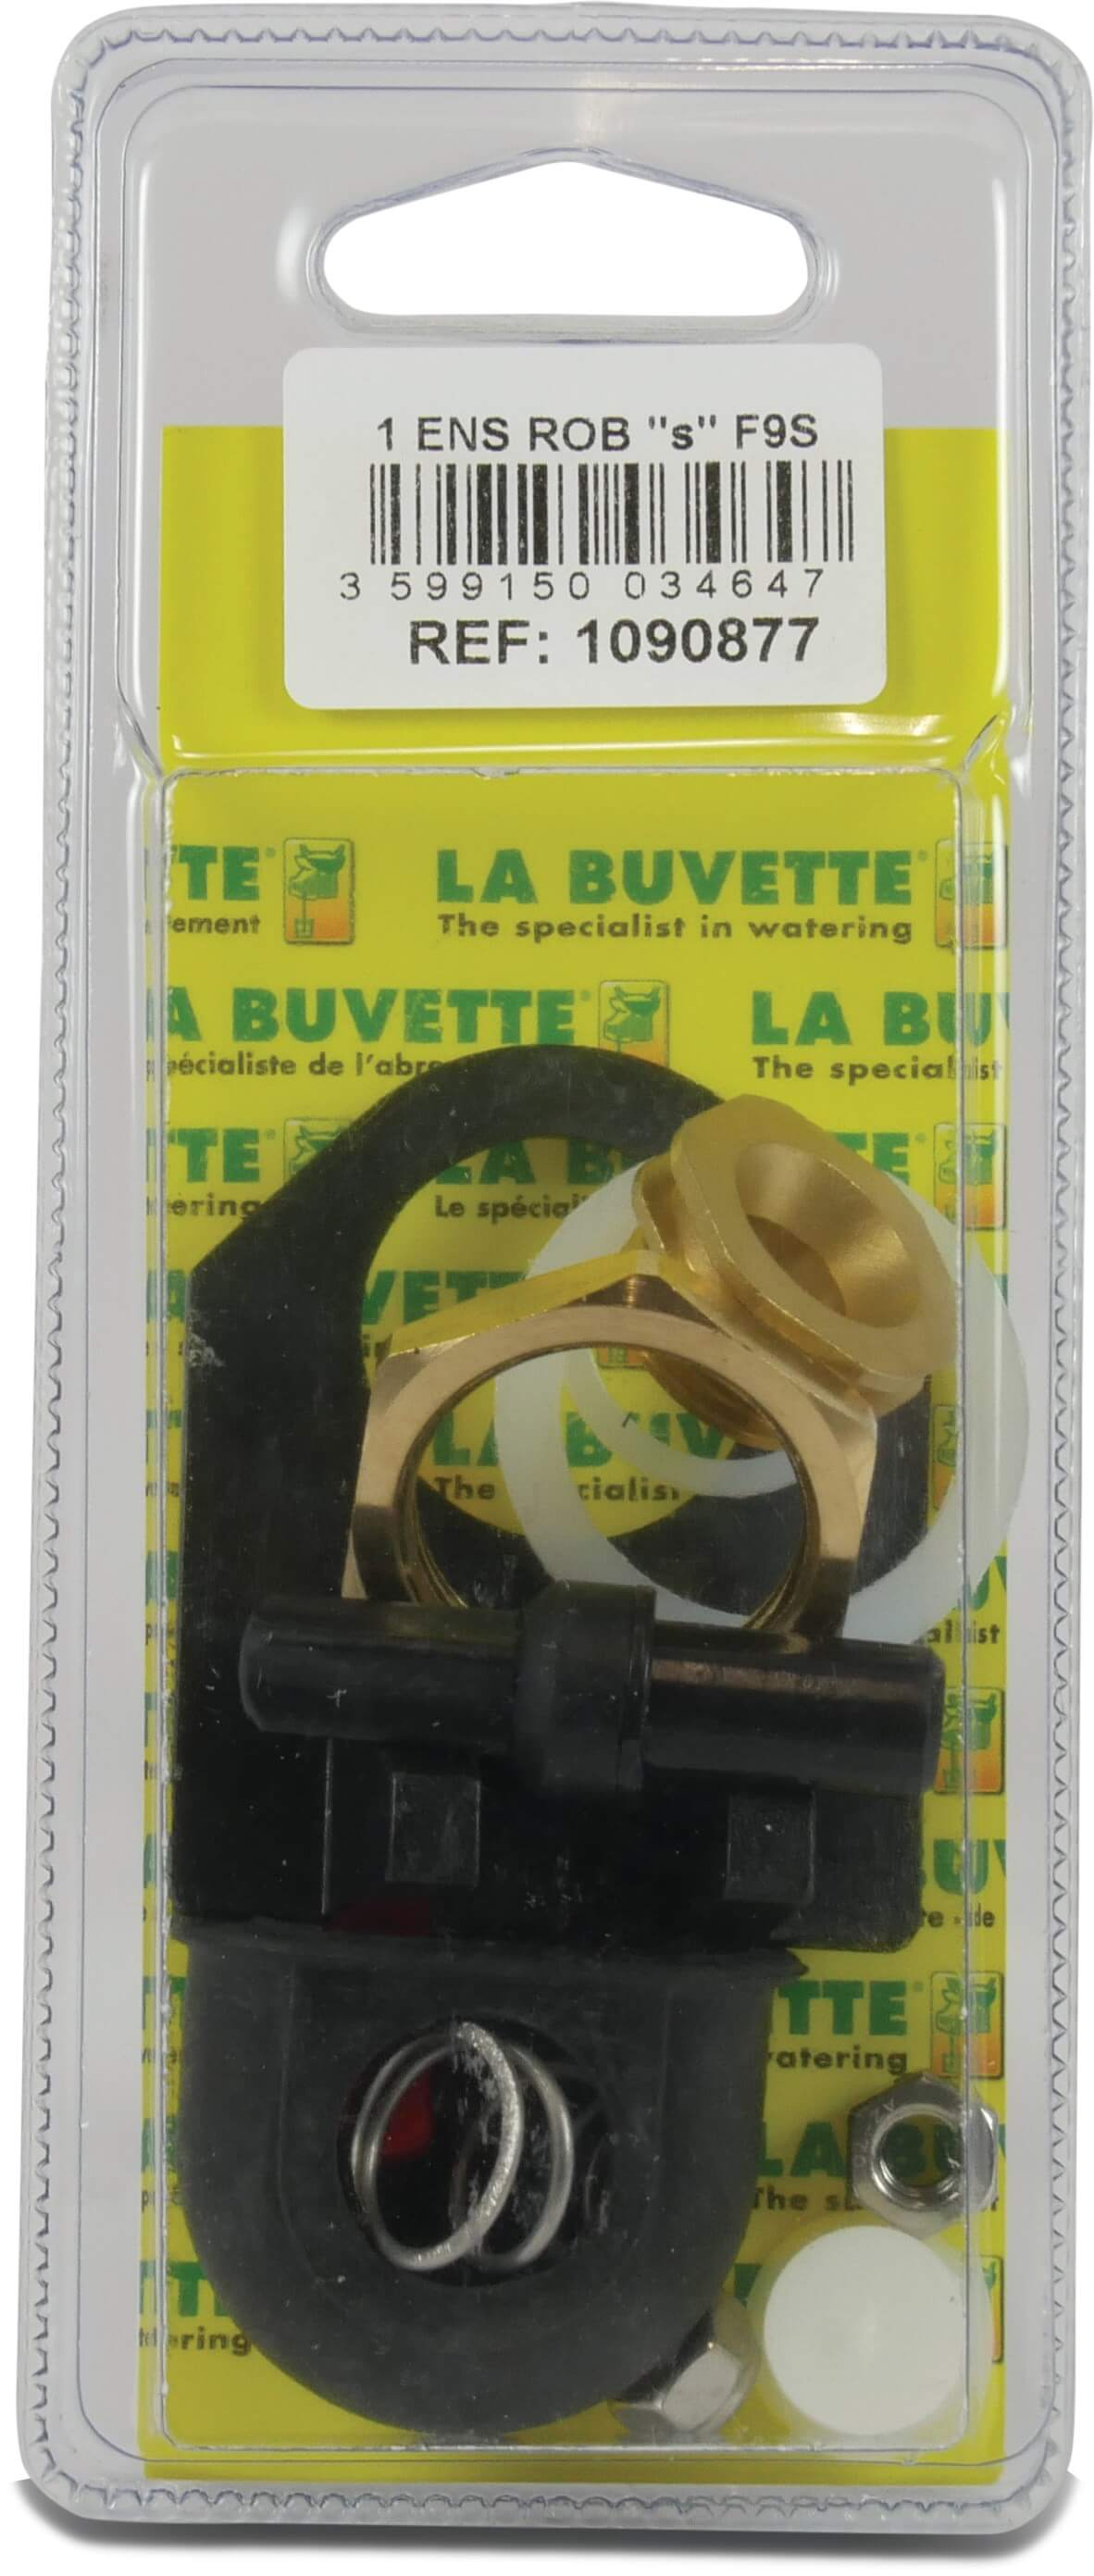 La Buvette Complete valve "S" F11 blister pack